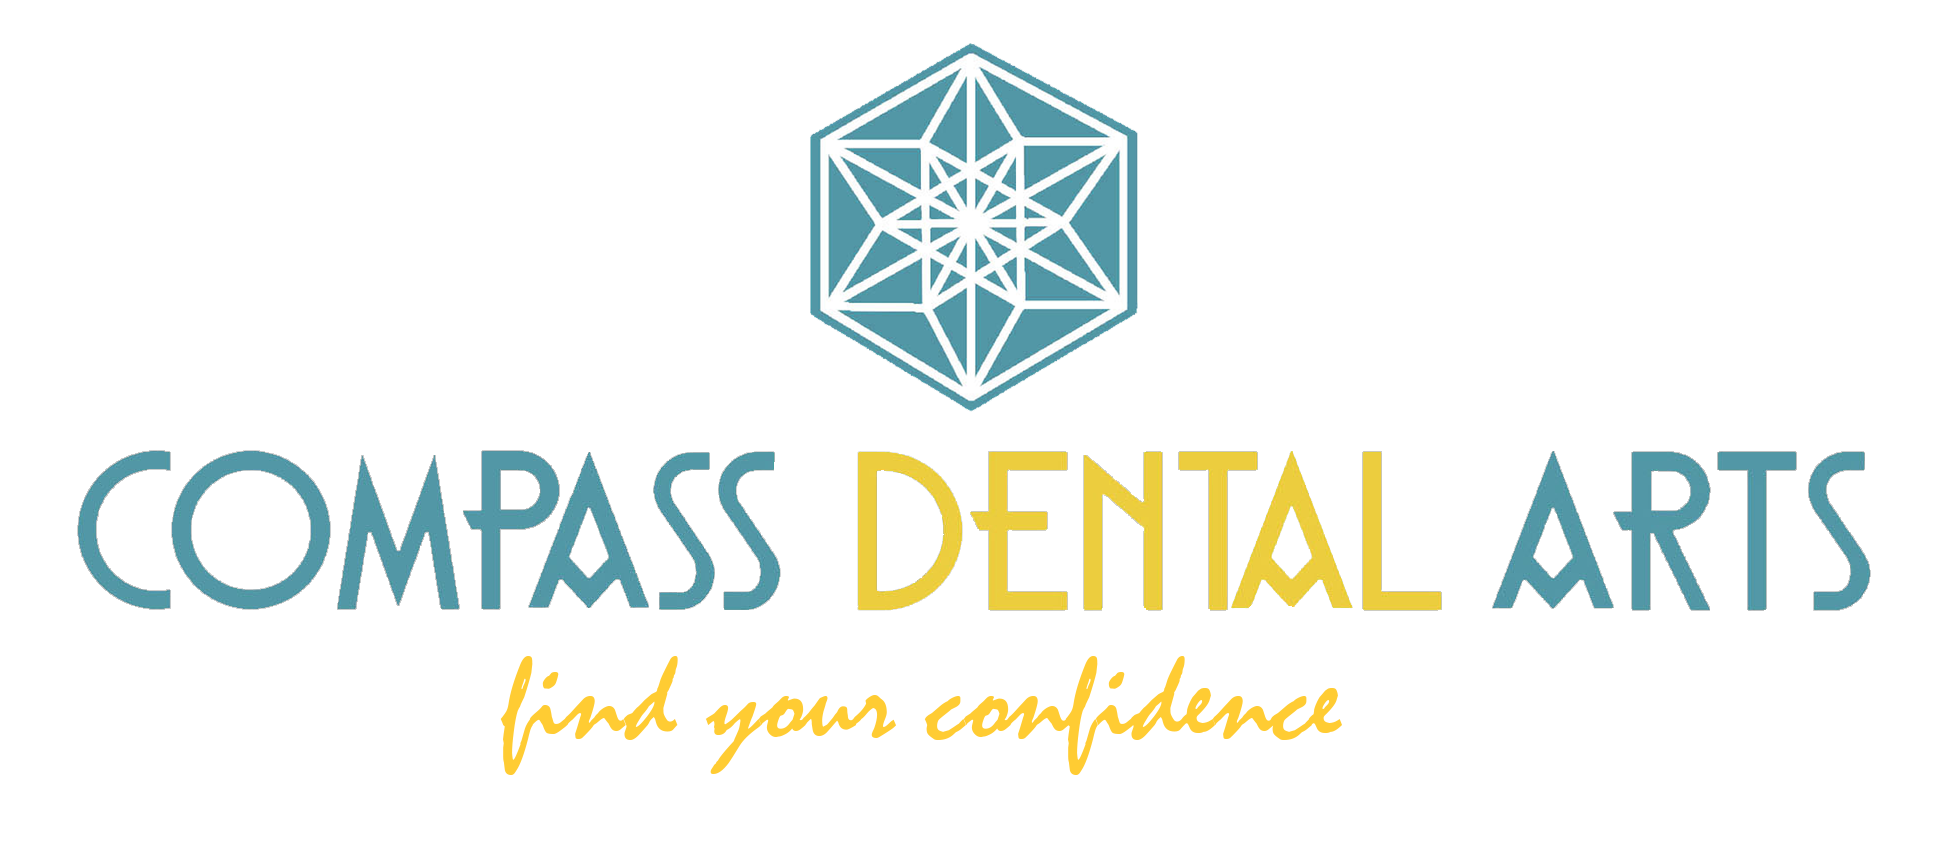  Compass Dental Arts Logo 